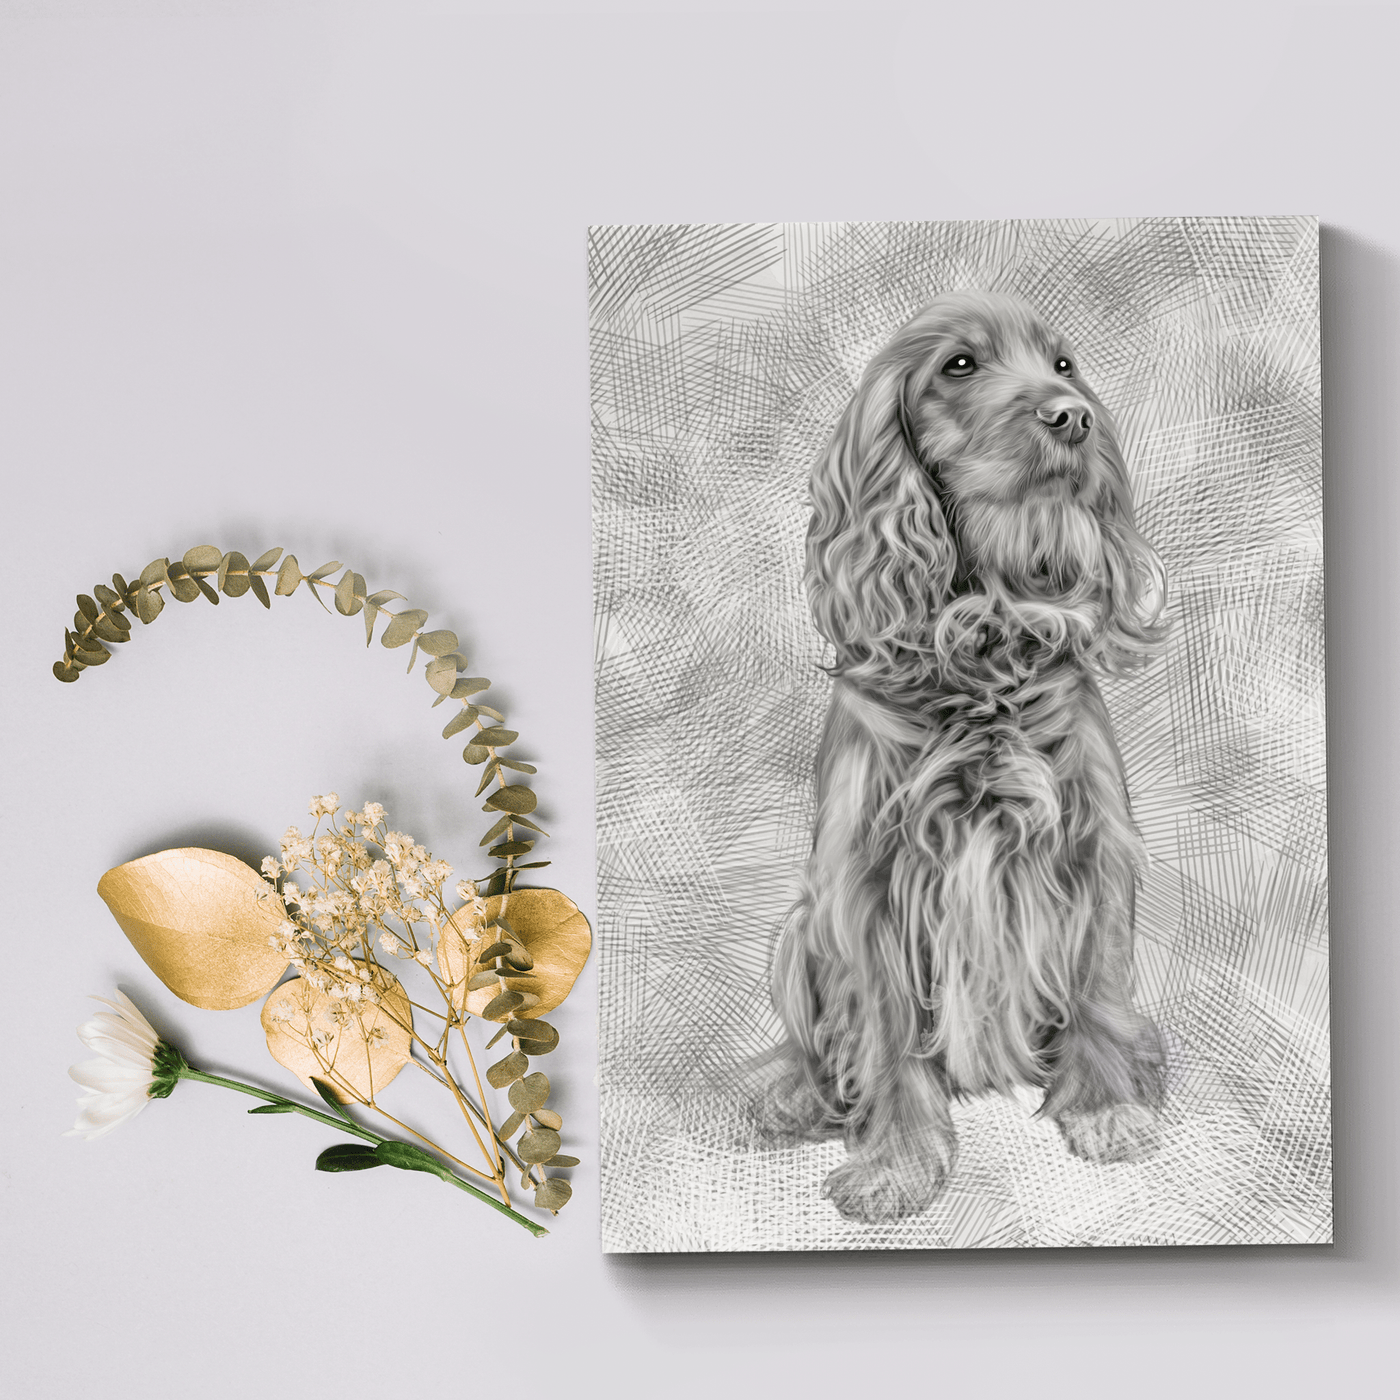 dog pencil sketch of an adorable fur dog